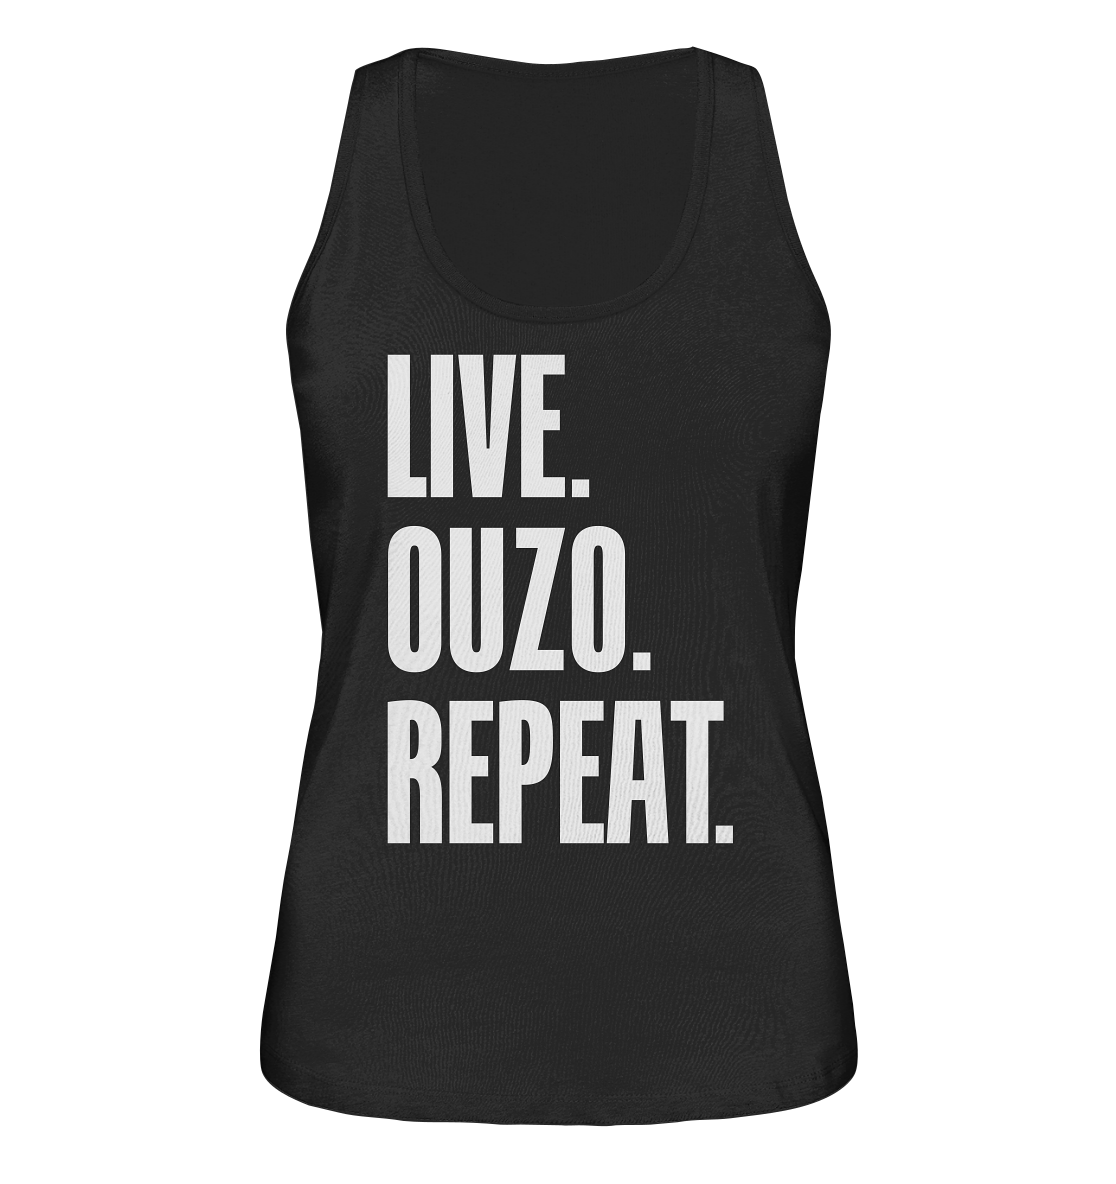 LIVE. OUZO. REPEAT. - Ladies organic tank top